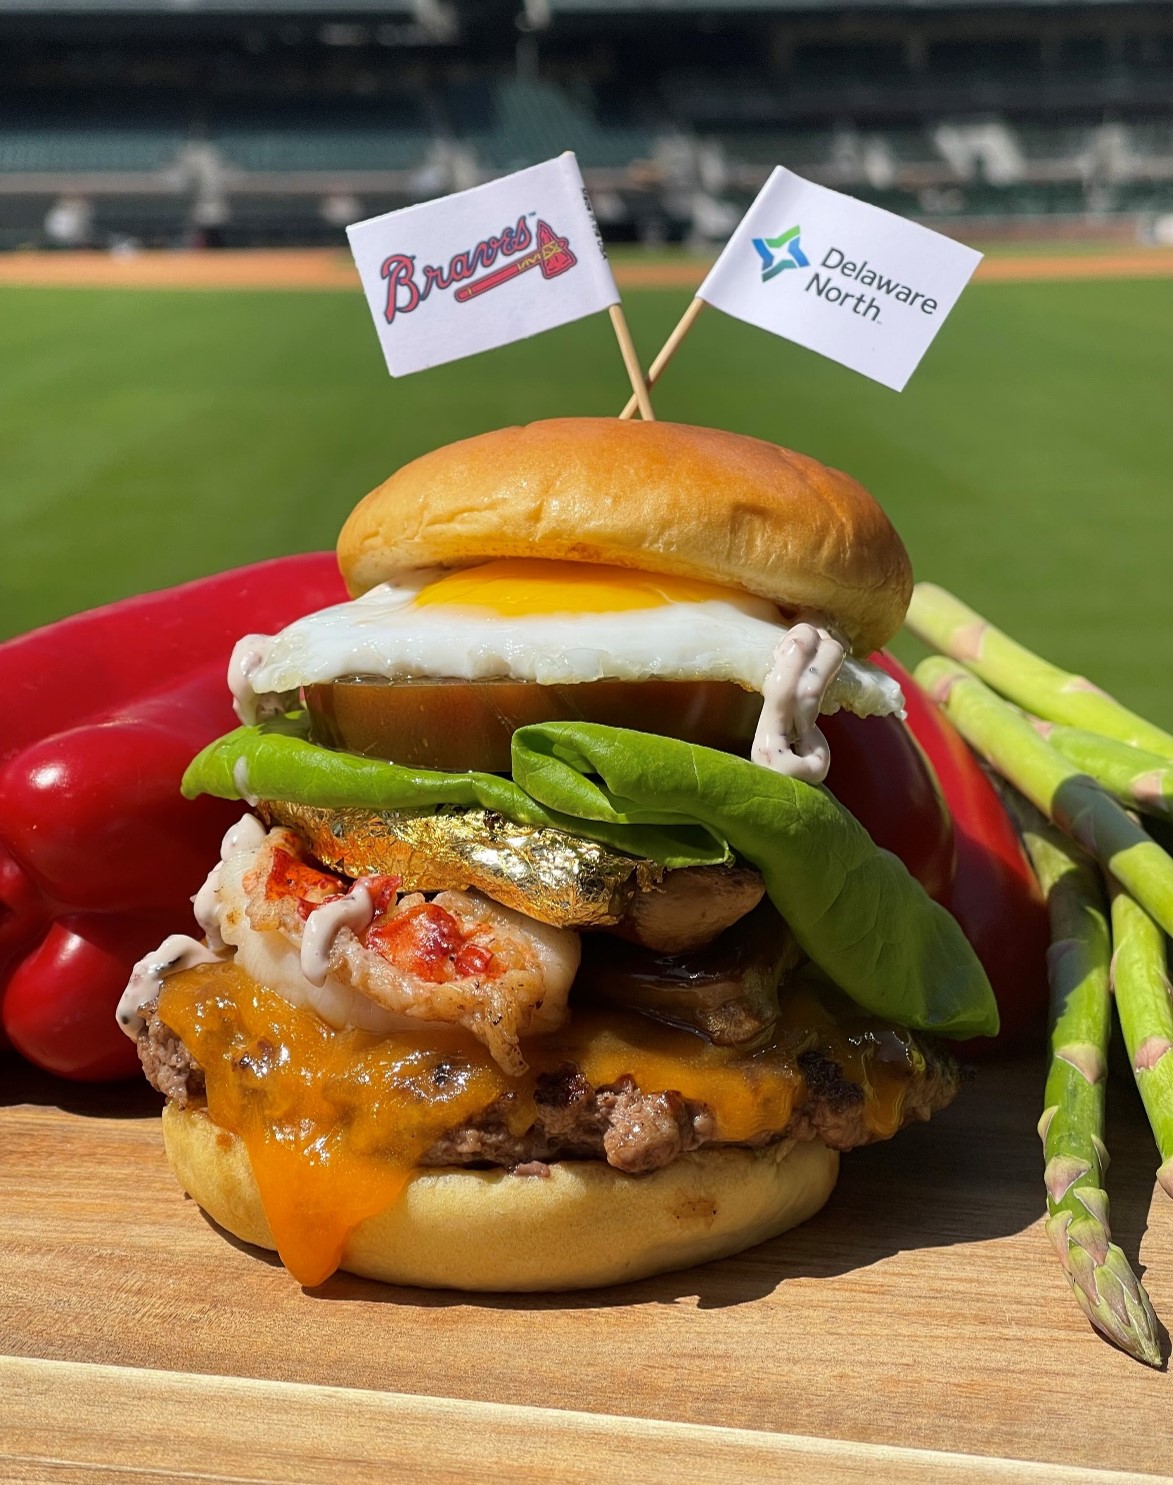 Atlanta Braves stadium food Truist Park includes a 151 burger with